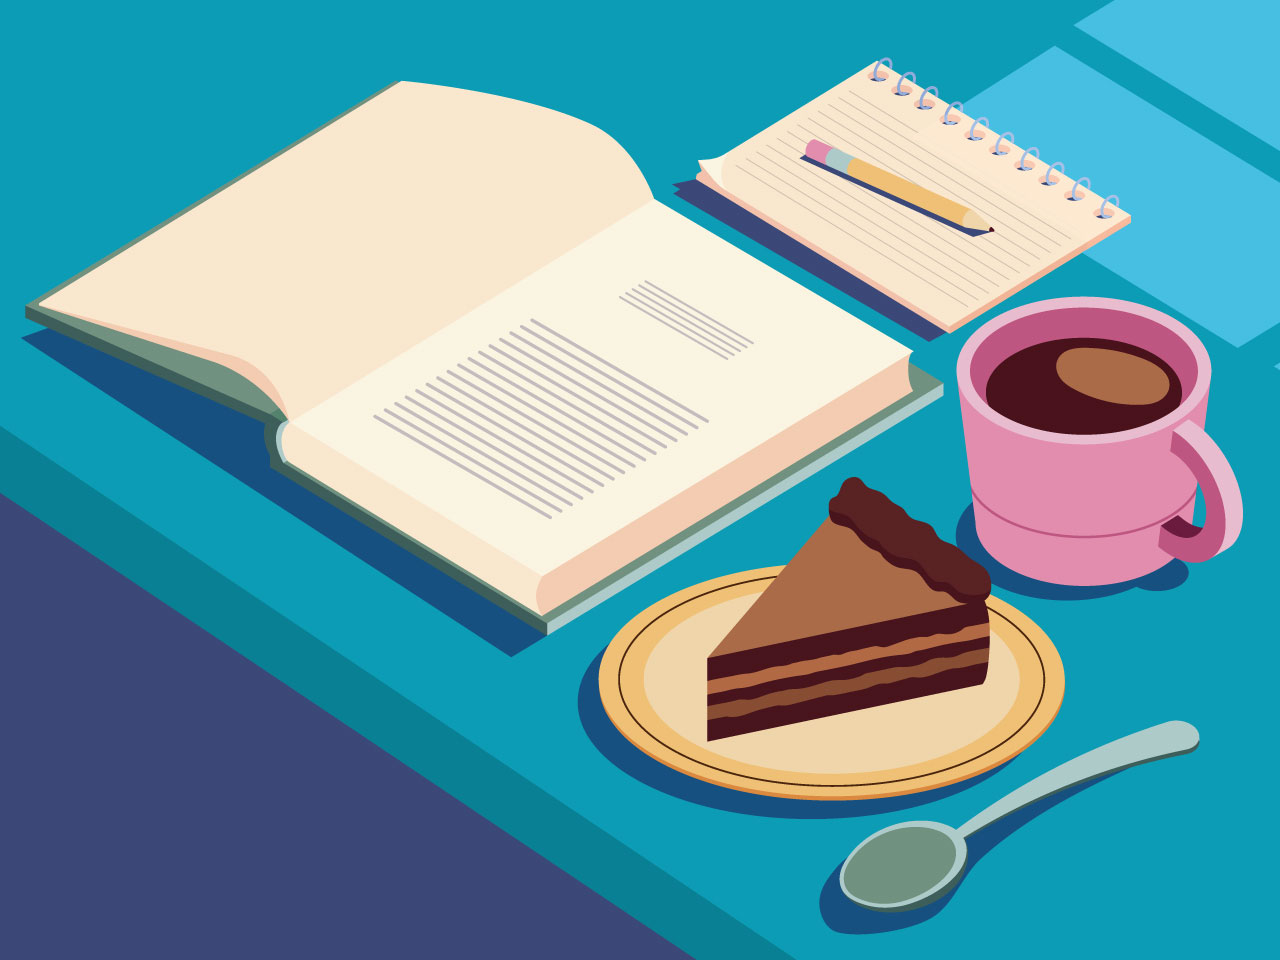 Book clipart book coffee cake cartoon illustration image